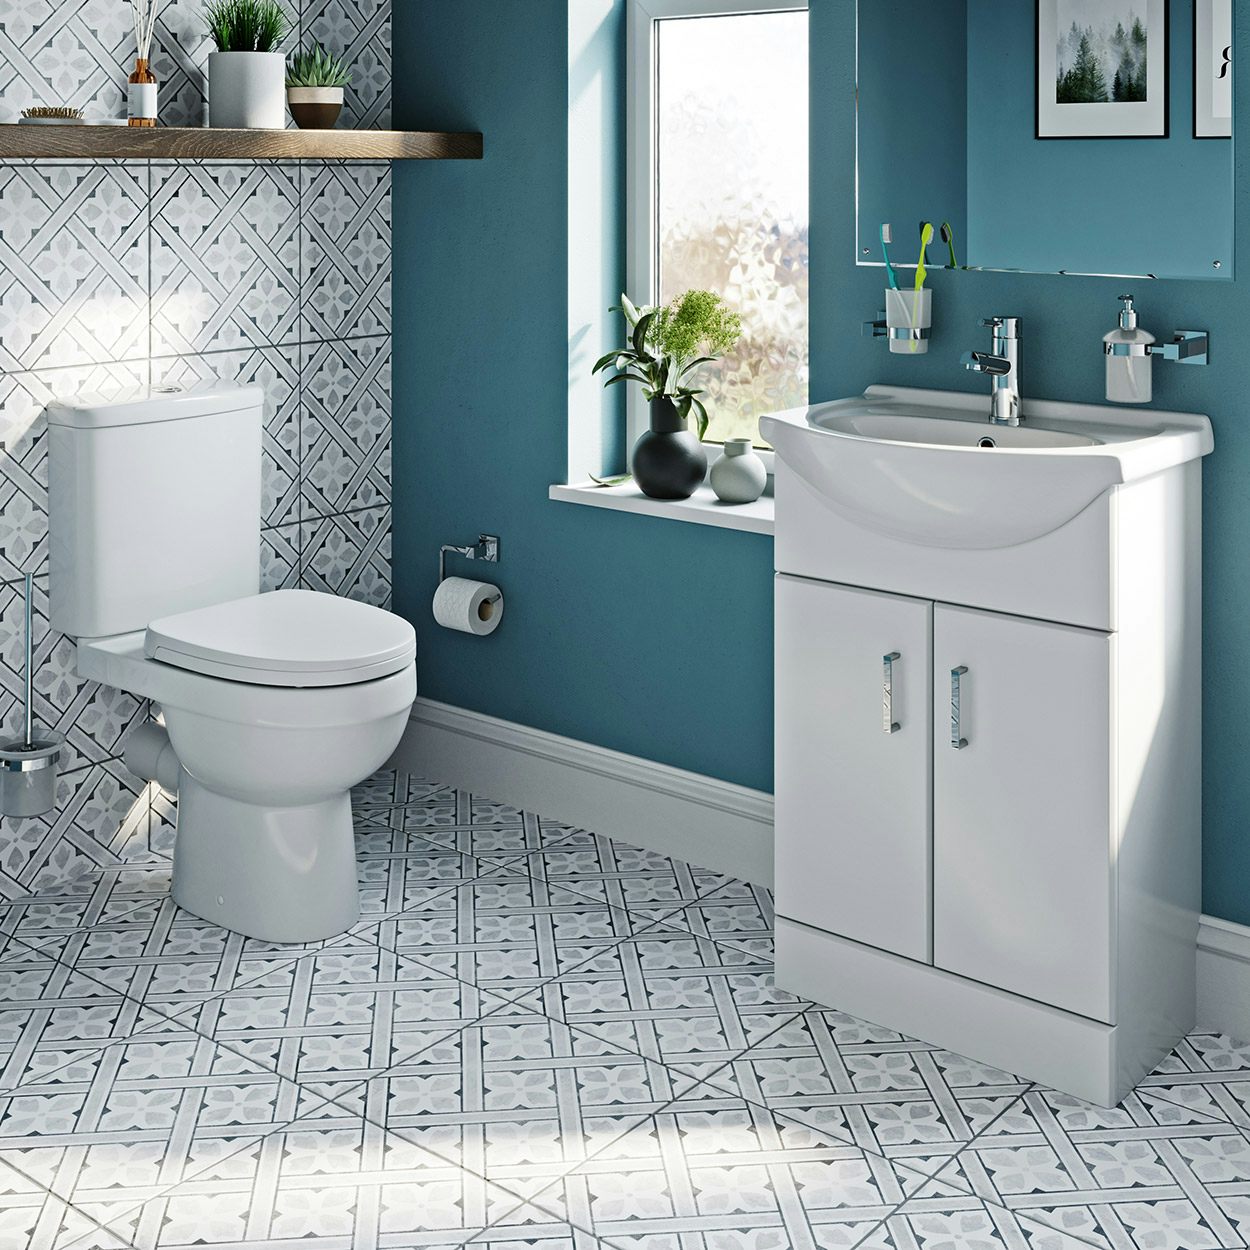 WC Toilet Unit Mirror Eden Gloss White Bathroom Furniture Vanity Cabinet Basin 